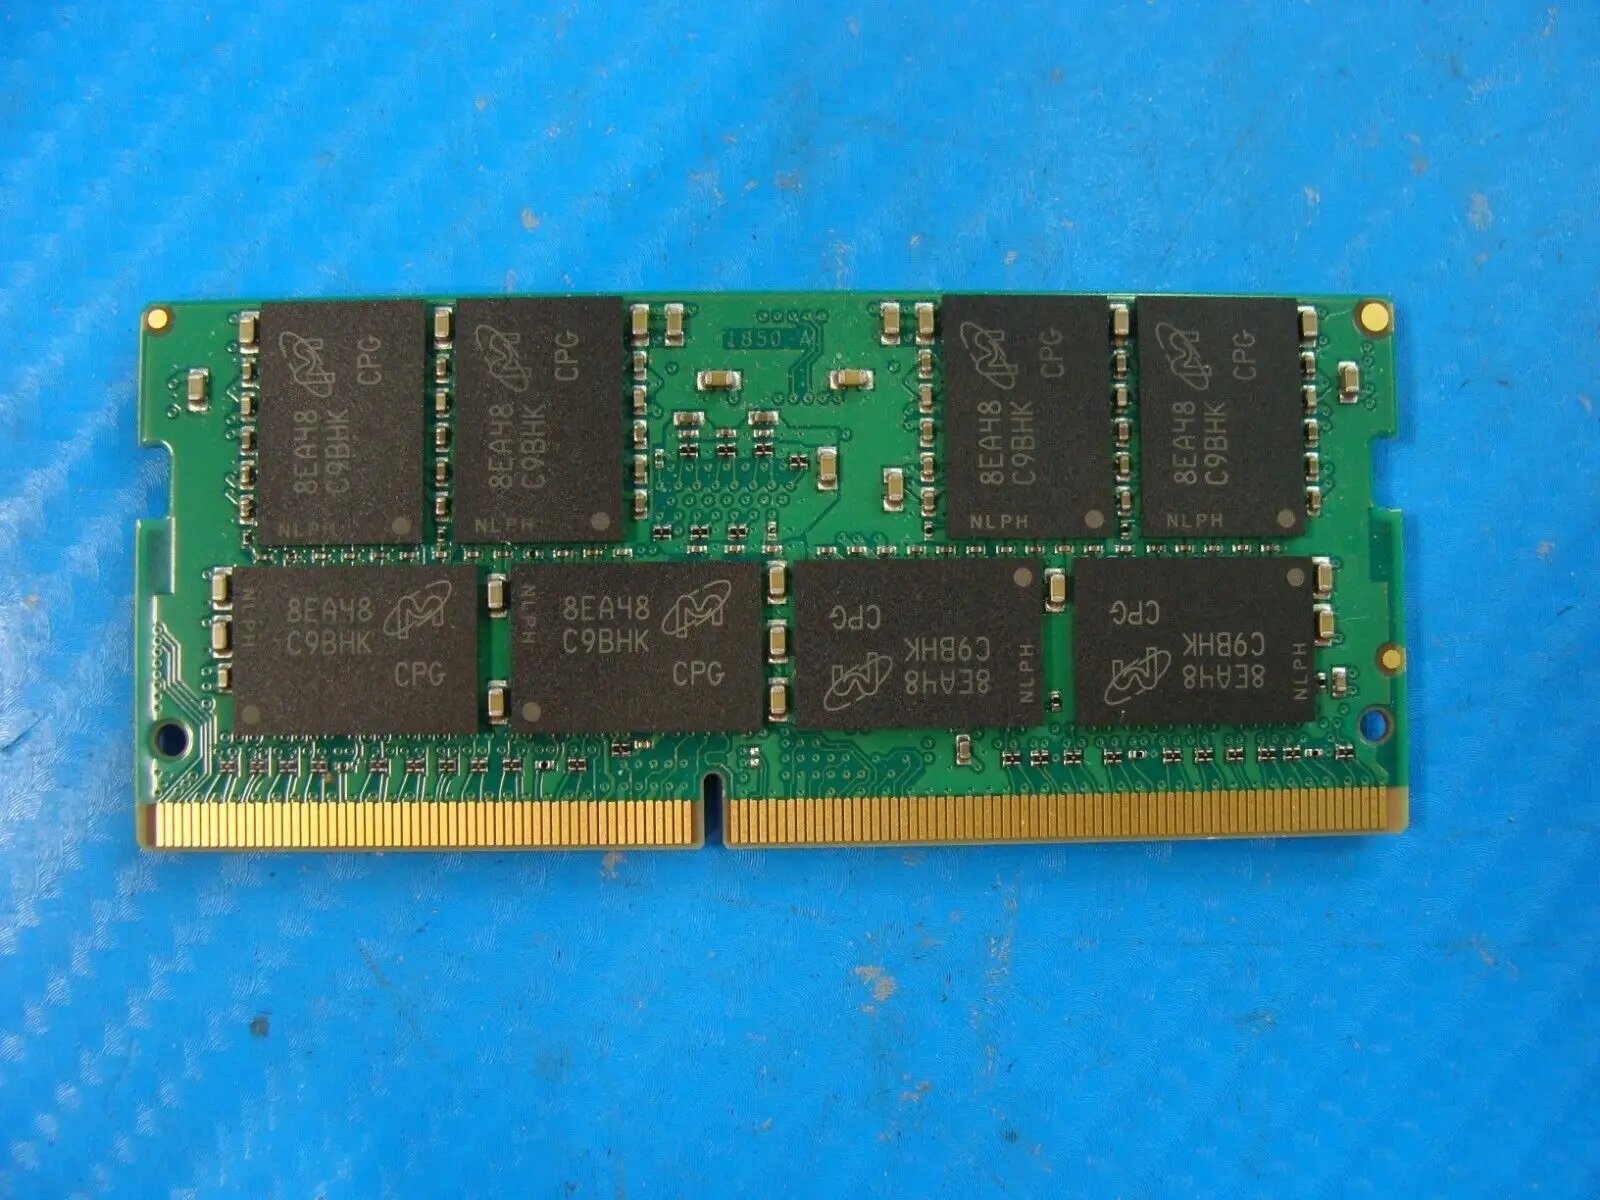 HP 820 G3 Crucial 8GB DDR4-2400 SO-DIMM Memory RAM CT8G4SFD824A.C16FADP